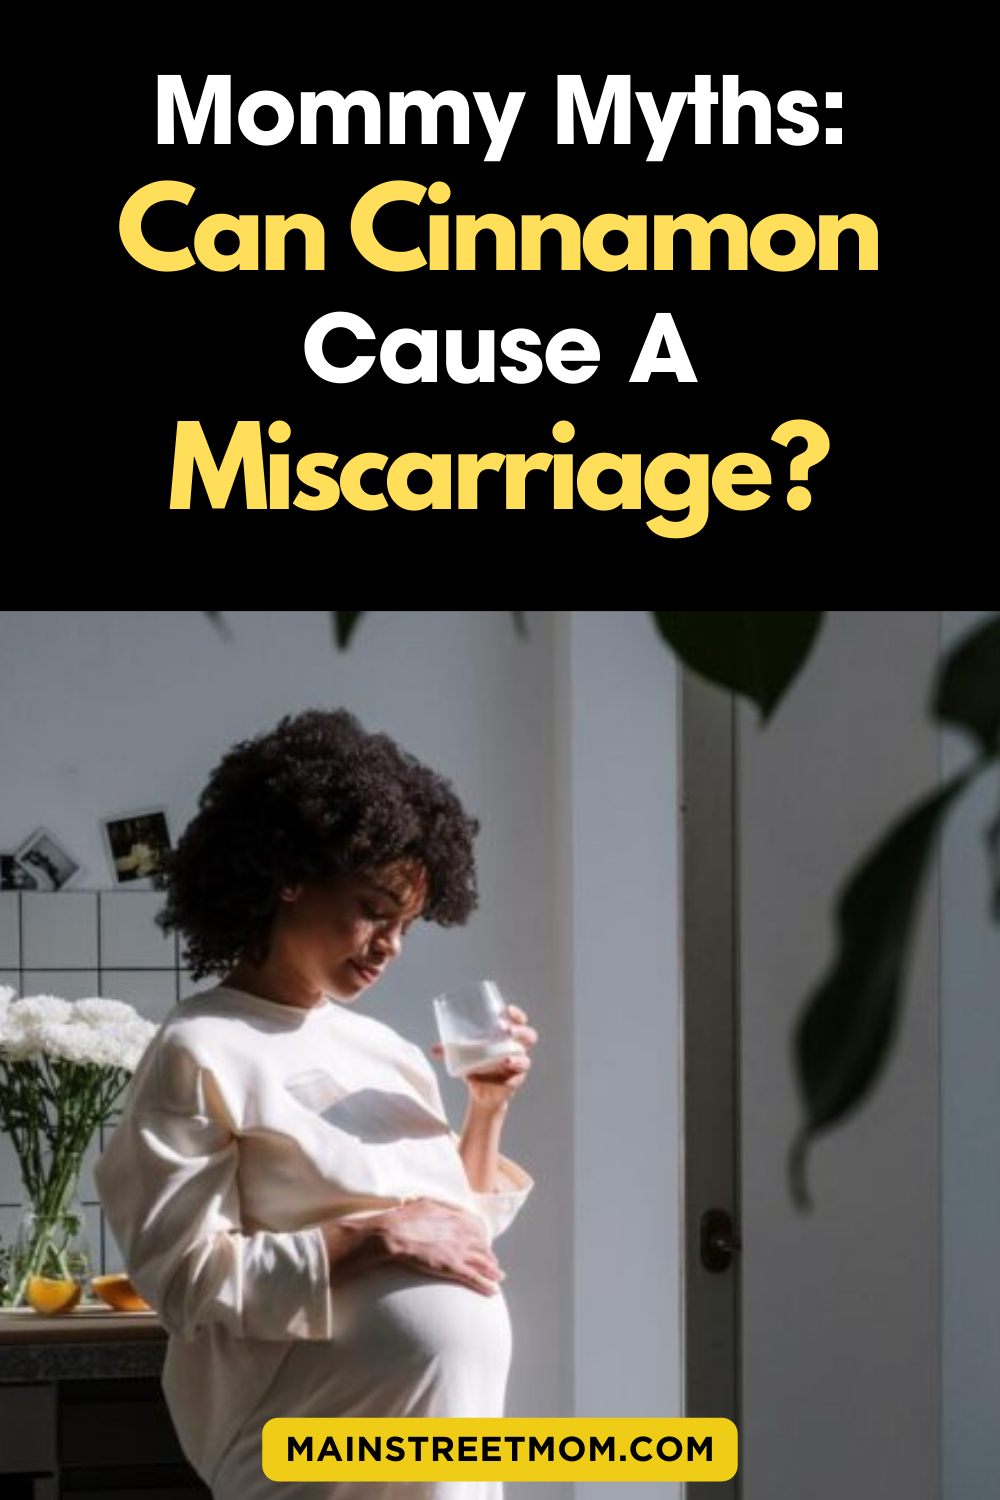 Mommy Myths: Can Cinnamon Cause A Miscarriage?
